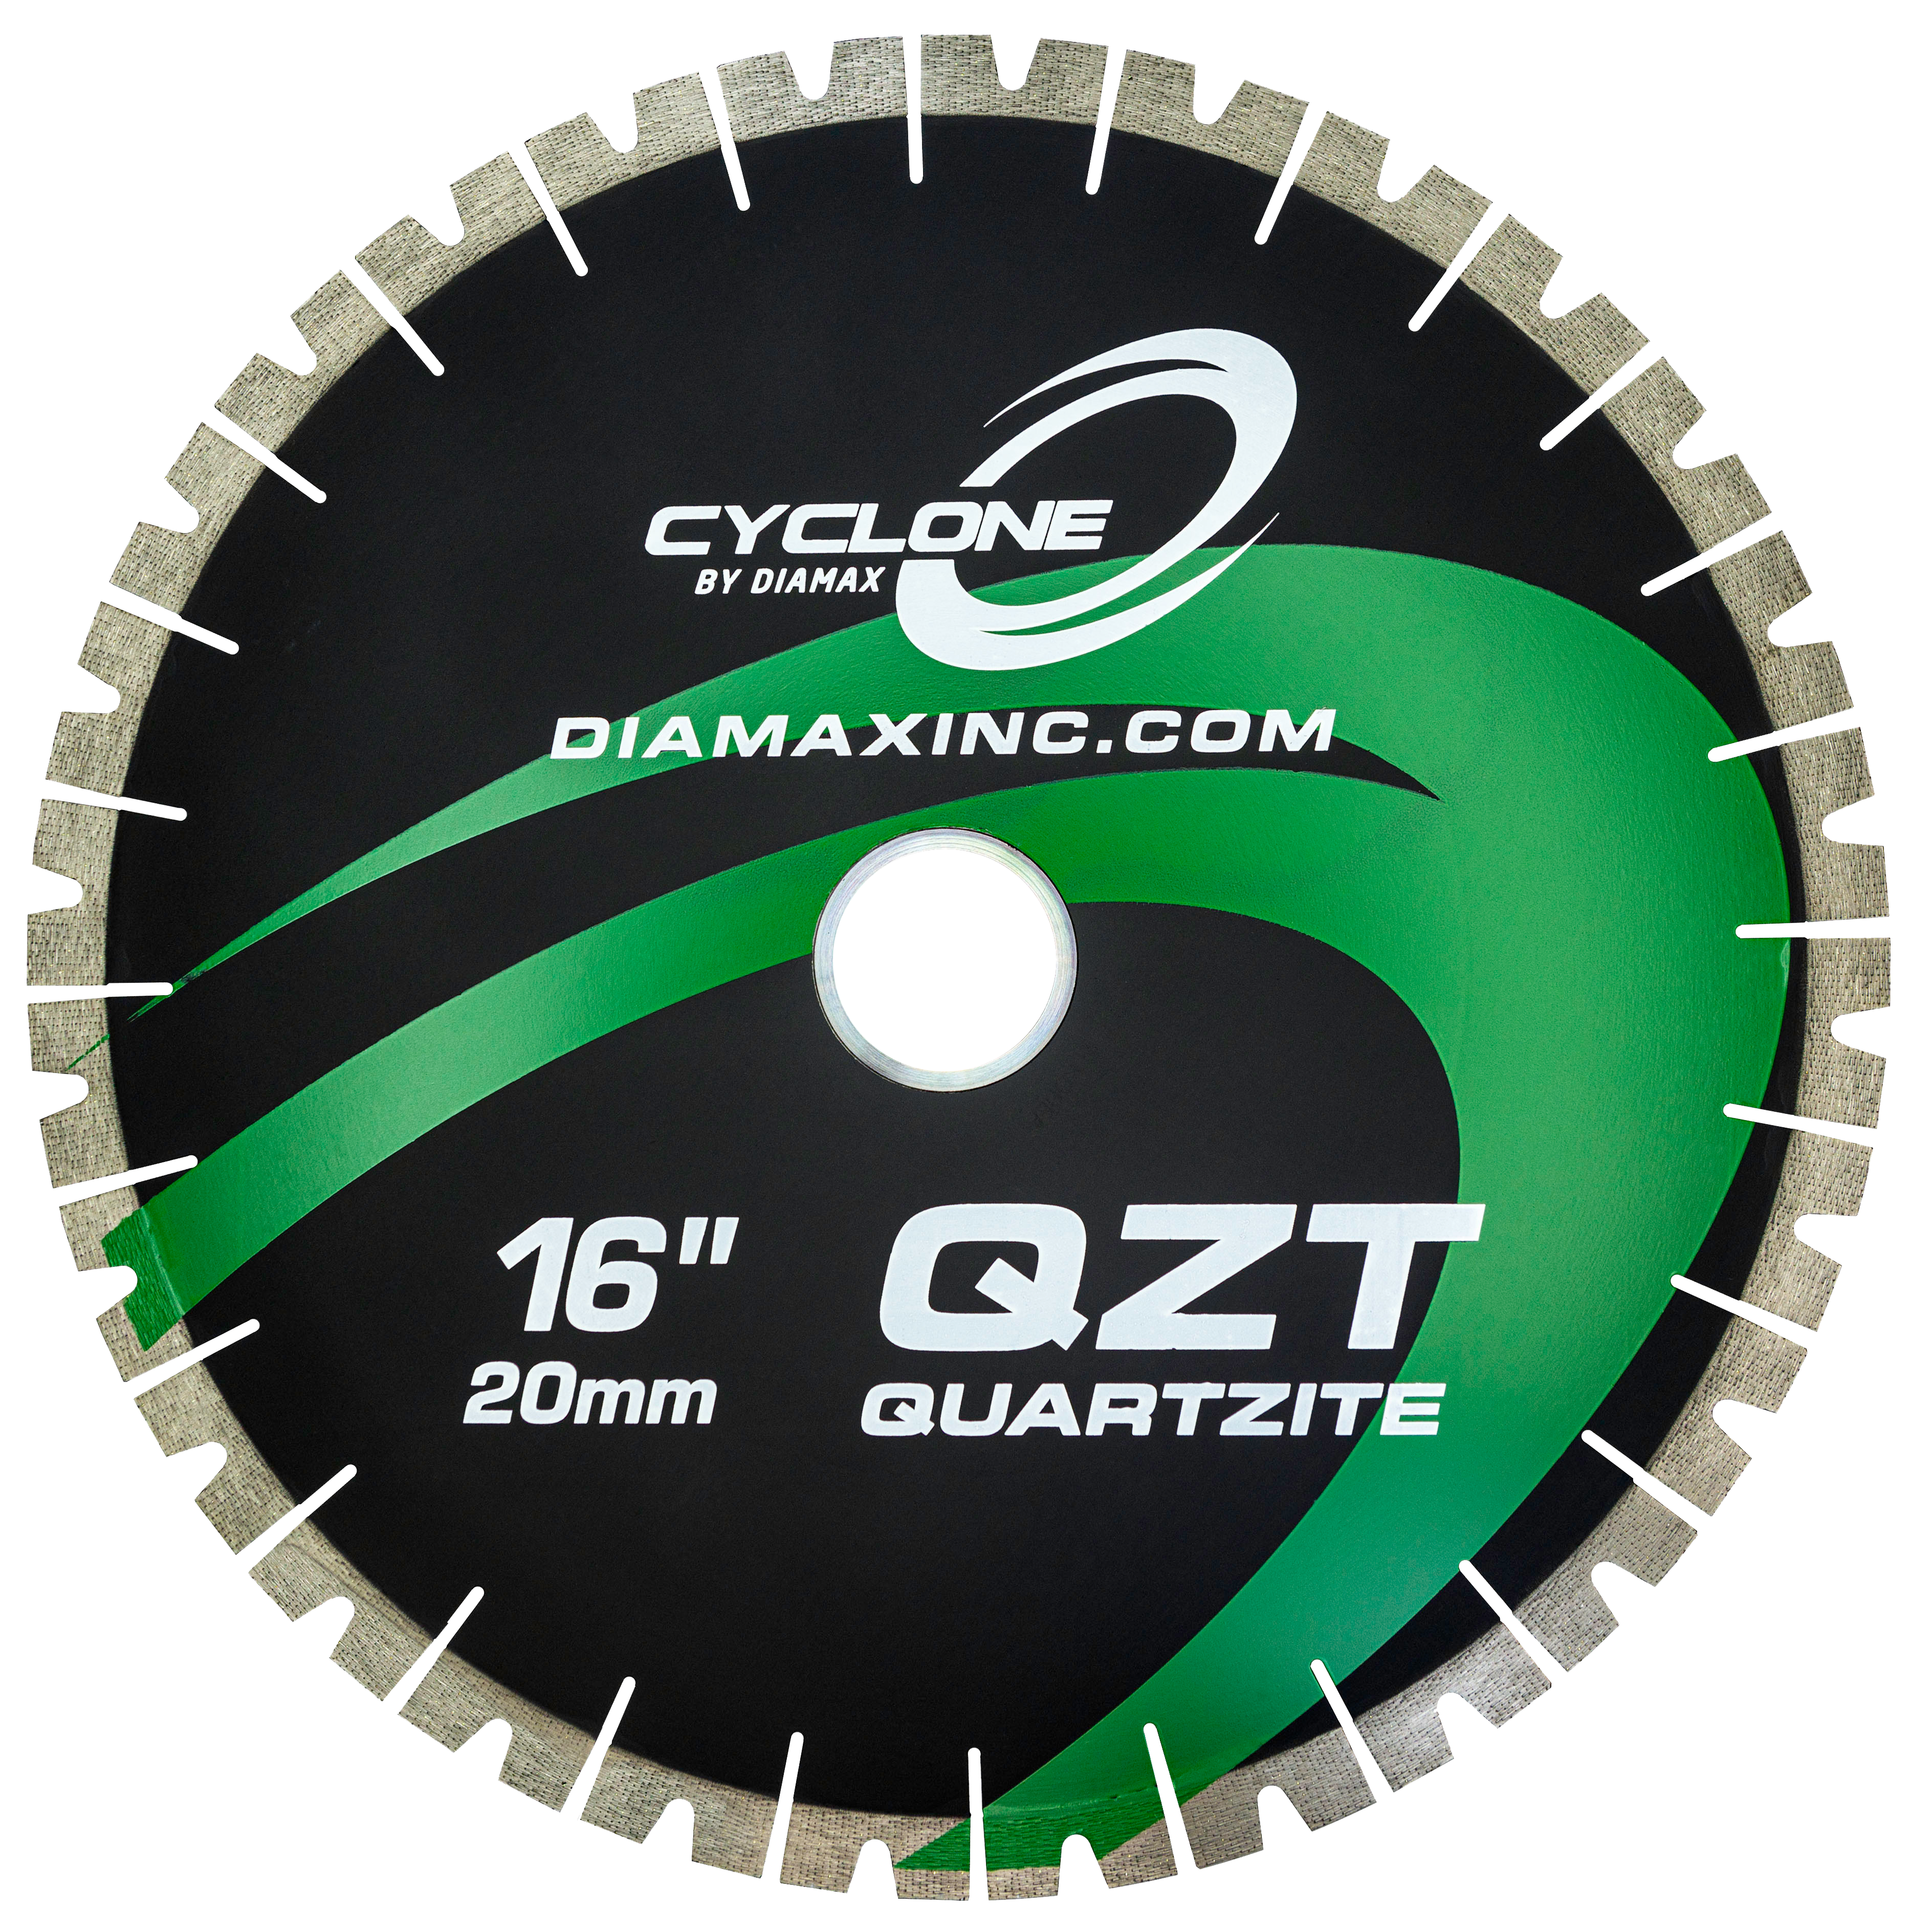 Cyclone QZT Quartzite Blade